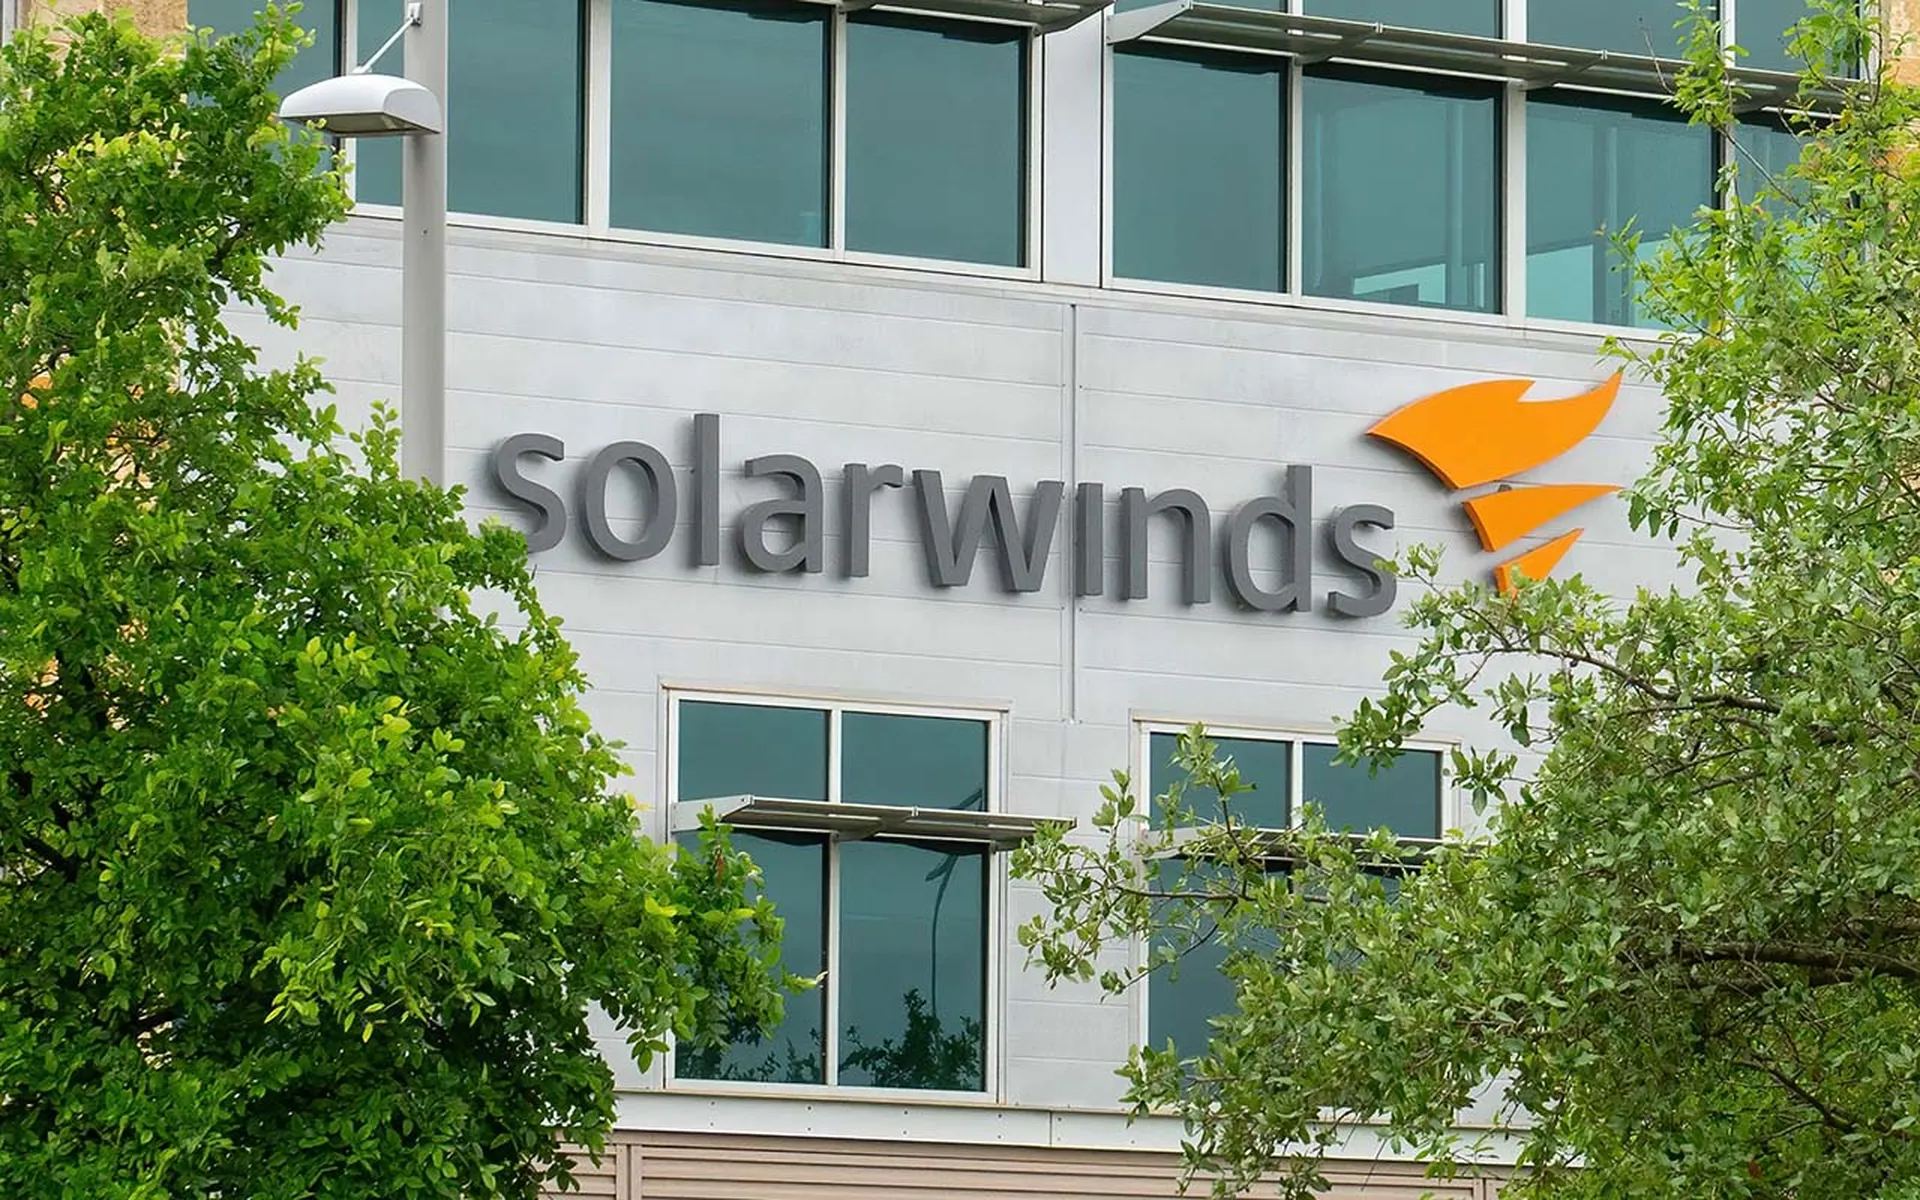 SolarWinds headquarters